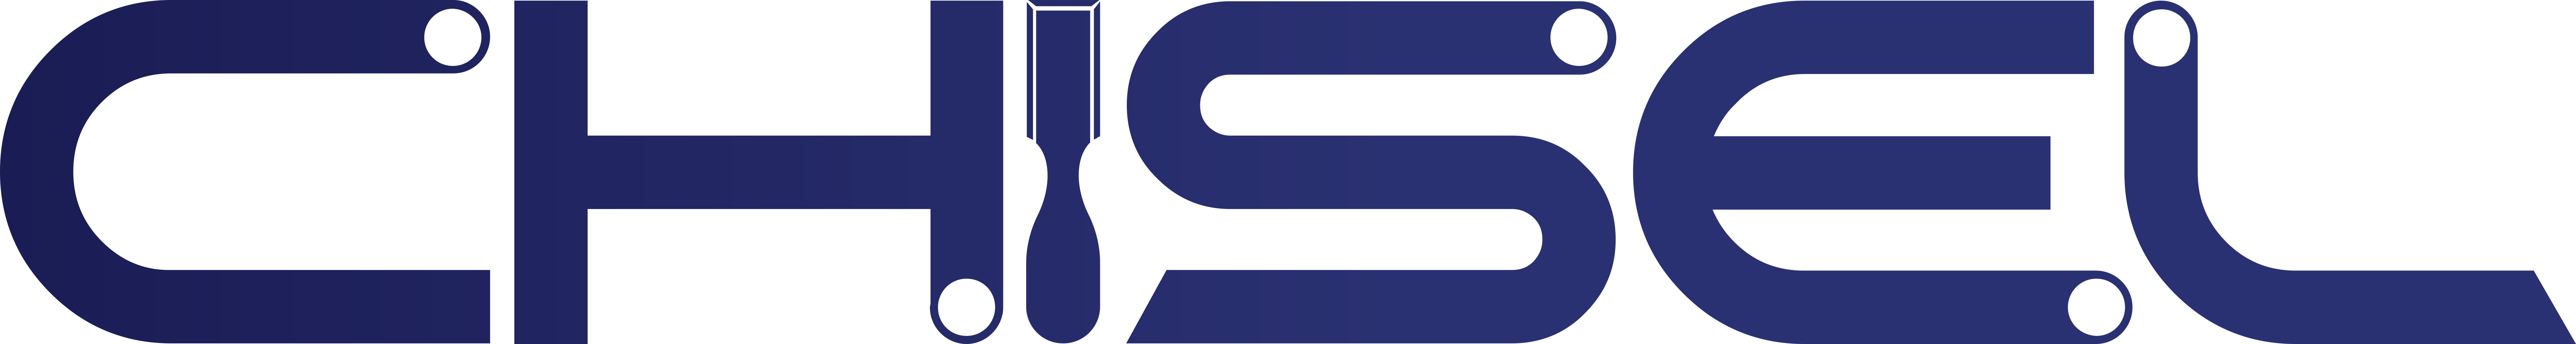 Chisel logo